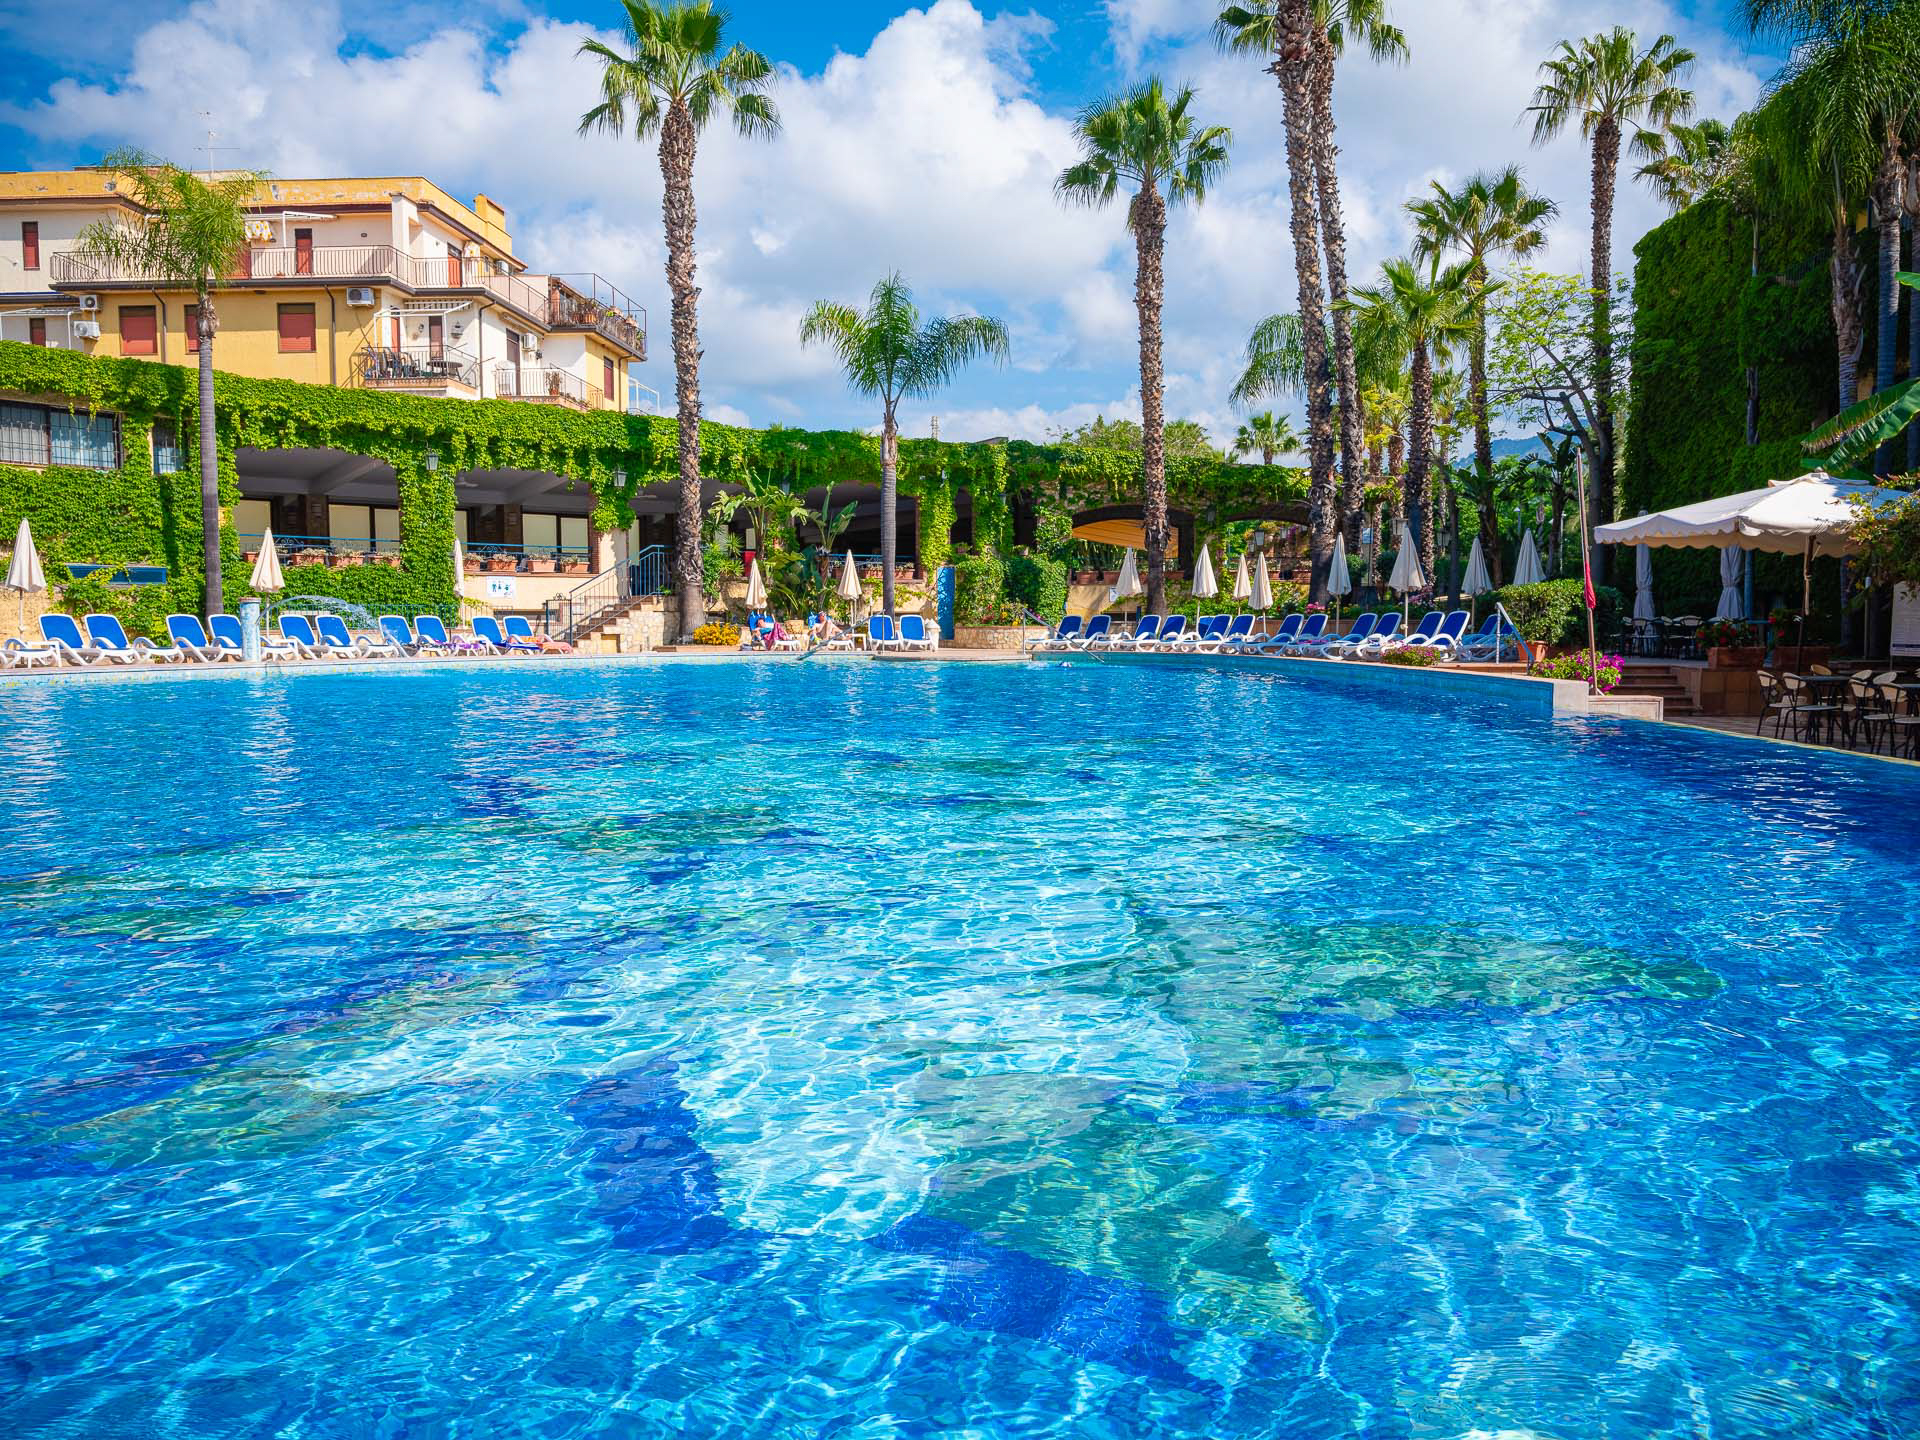 Hotel Caesar Palace - Main pool